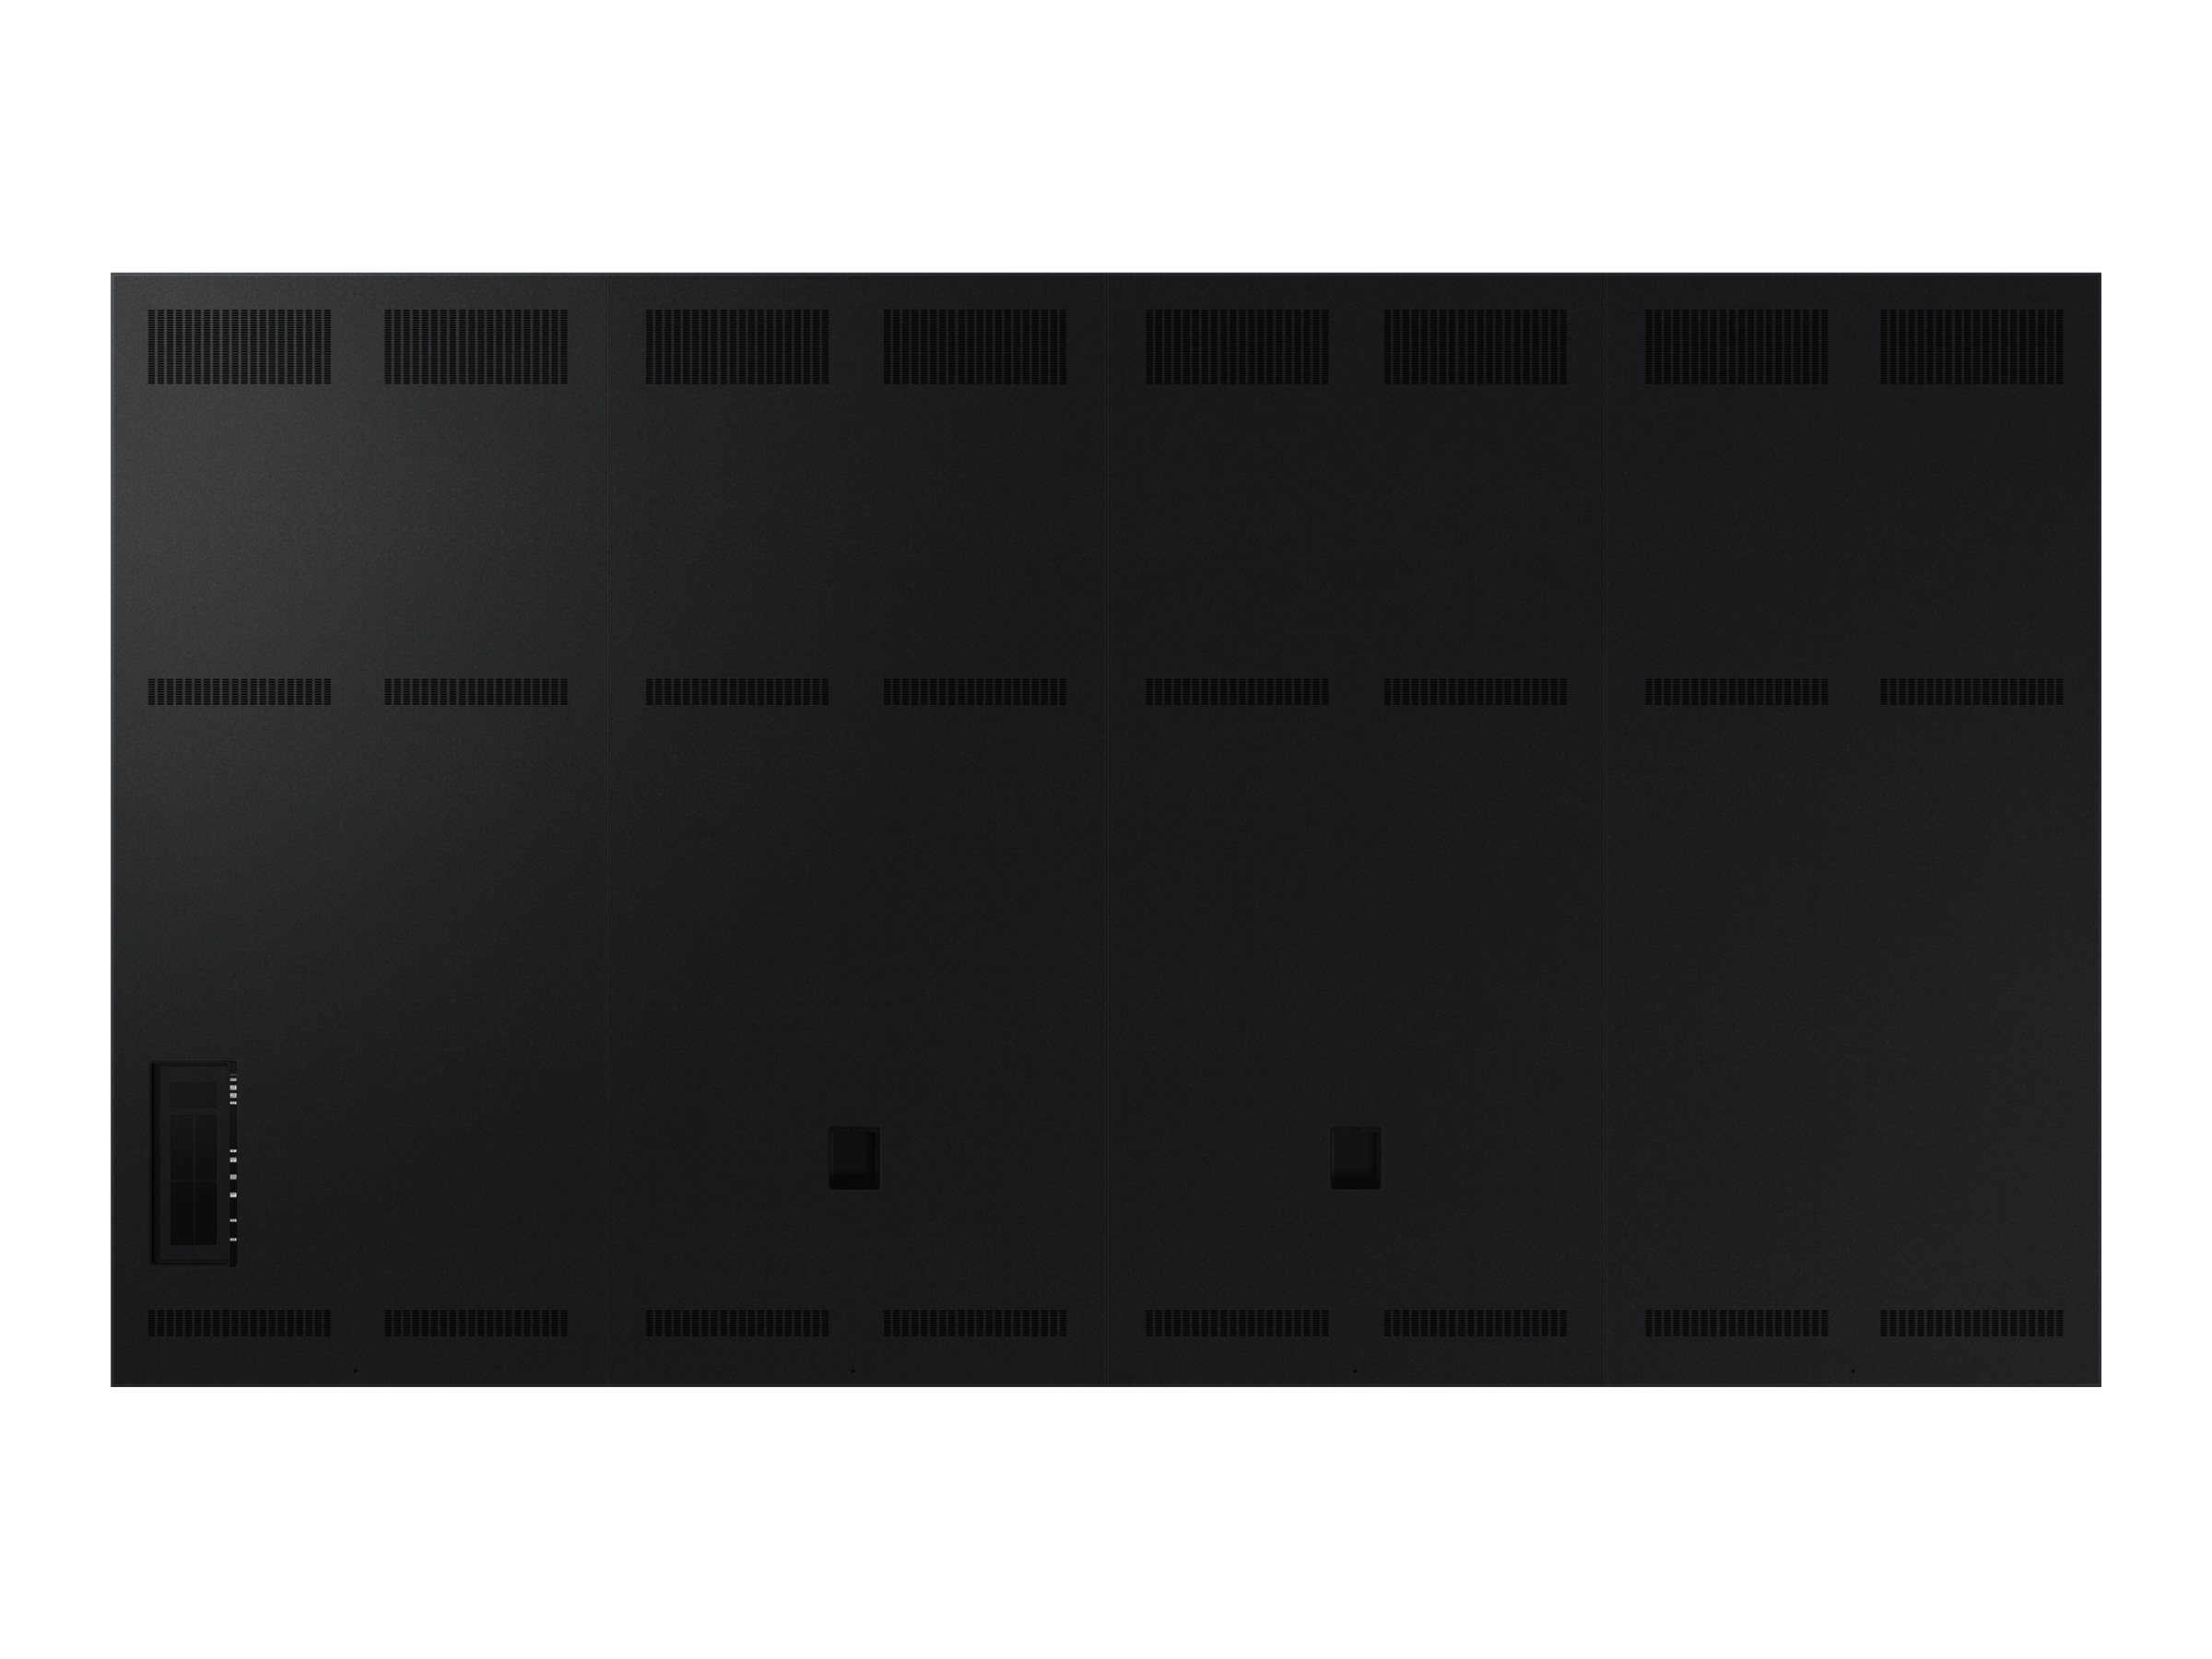 Samsung The Wall All-In-One IAB 146 2K - IAB Series LED-Videowand - Digital Signage - 1920 x 1080 146" - Flip-chip RGB LED - HDR